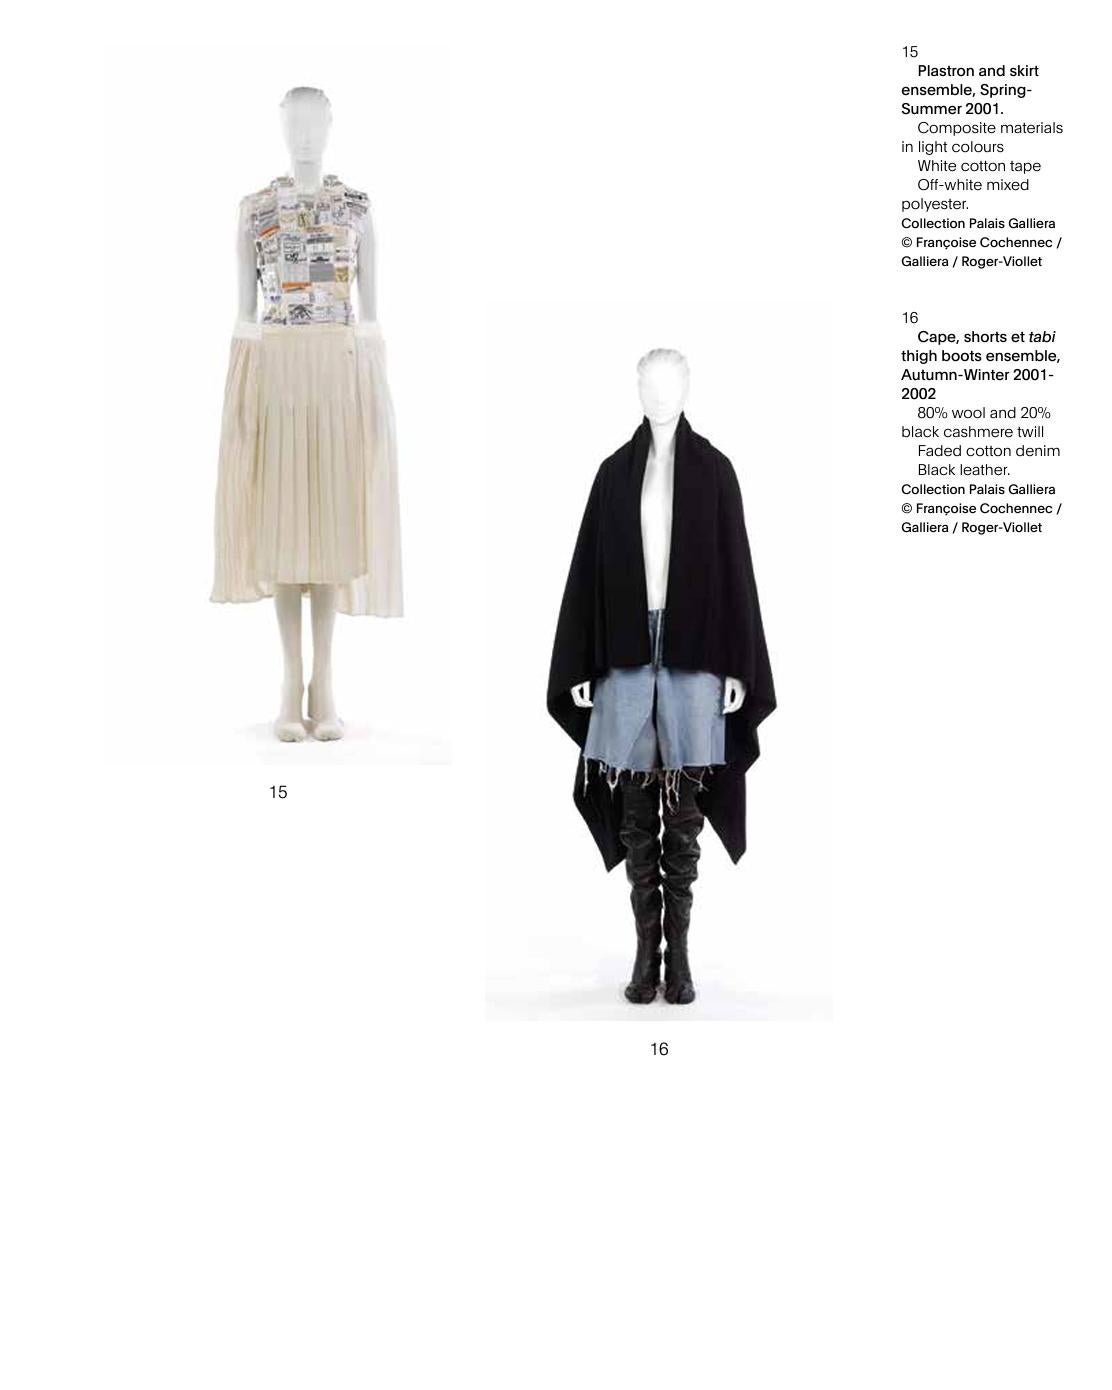 S/S 2001 Maison Martin Margiela One-of-One Artisanal Ecru Pleated Skirt 2